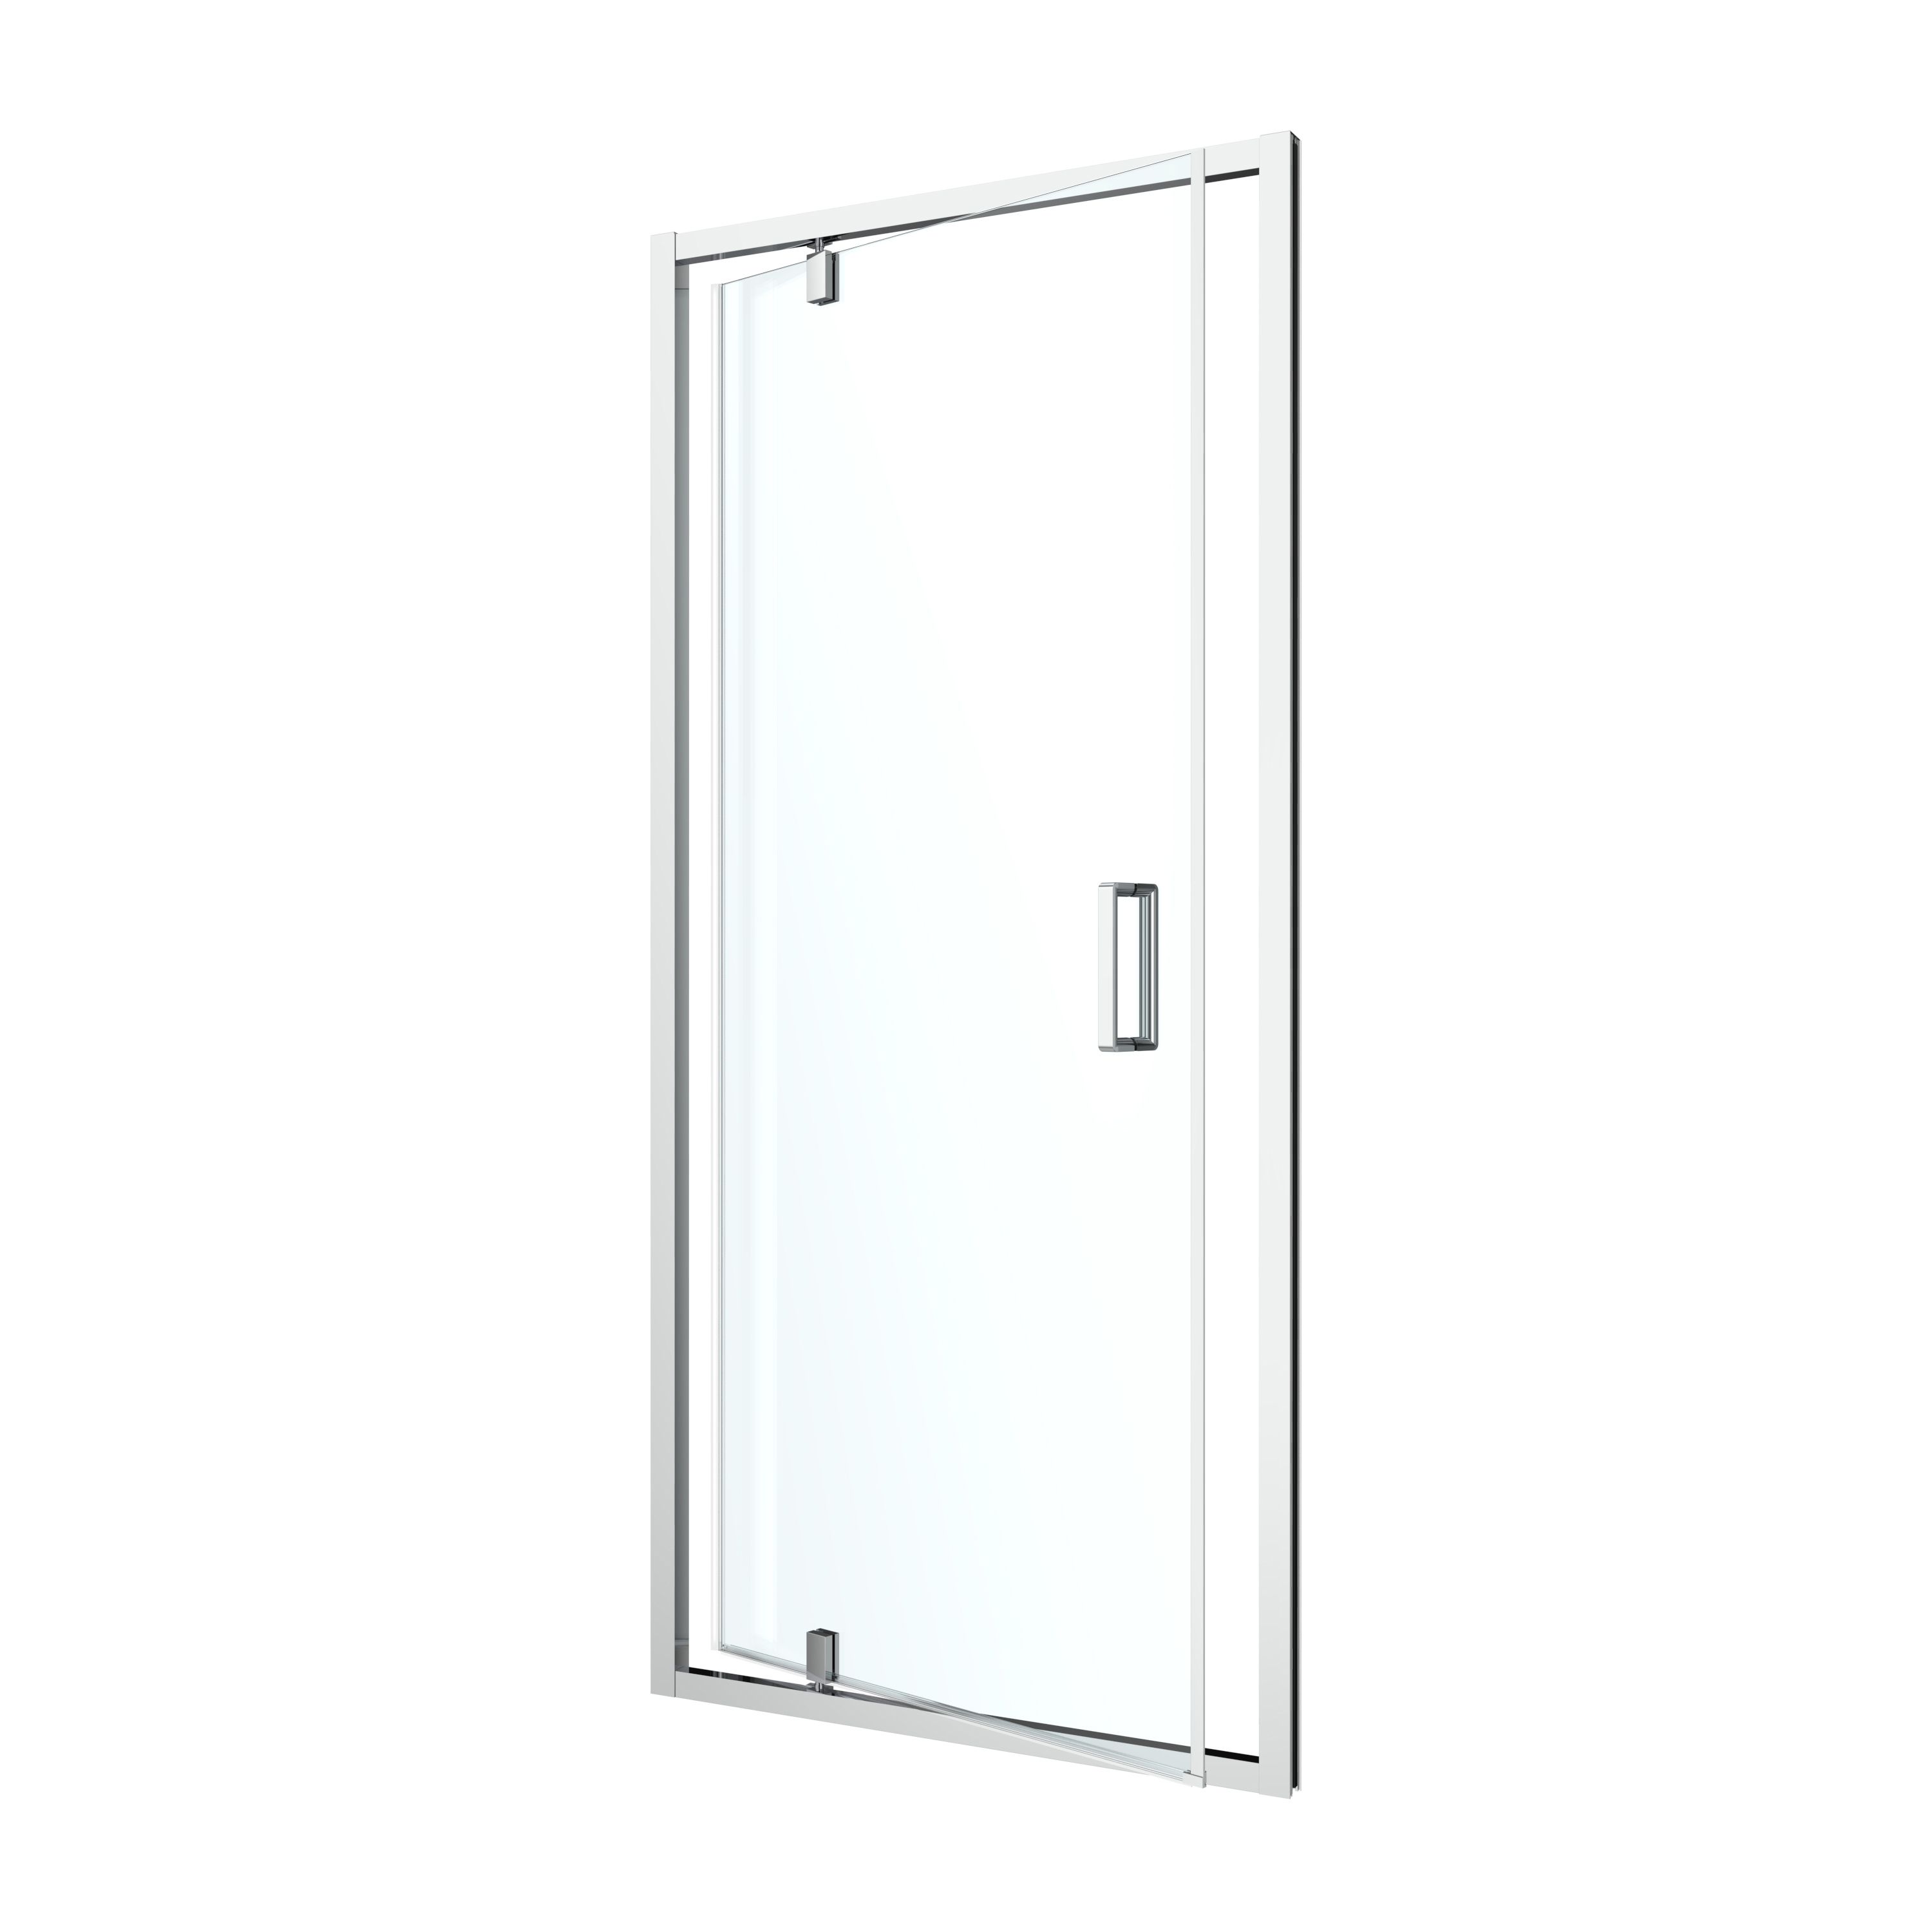 GoodHome Ledava Minimal frame Chrome effect Clear glass Half open pivot Shower Door (H)195cm (W)76cm